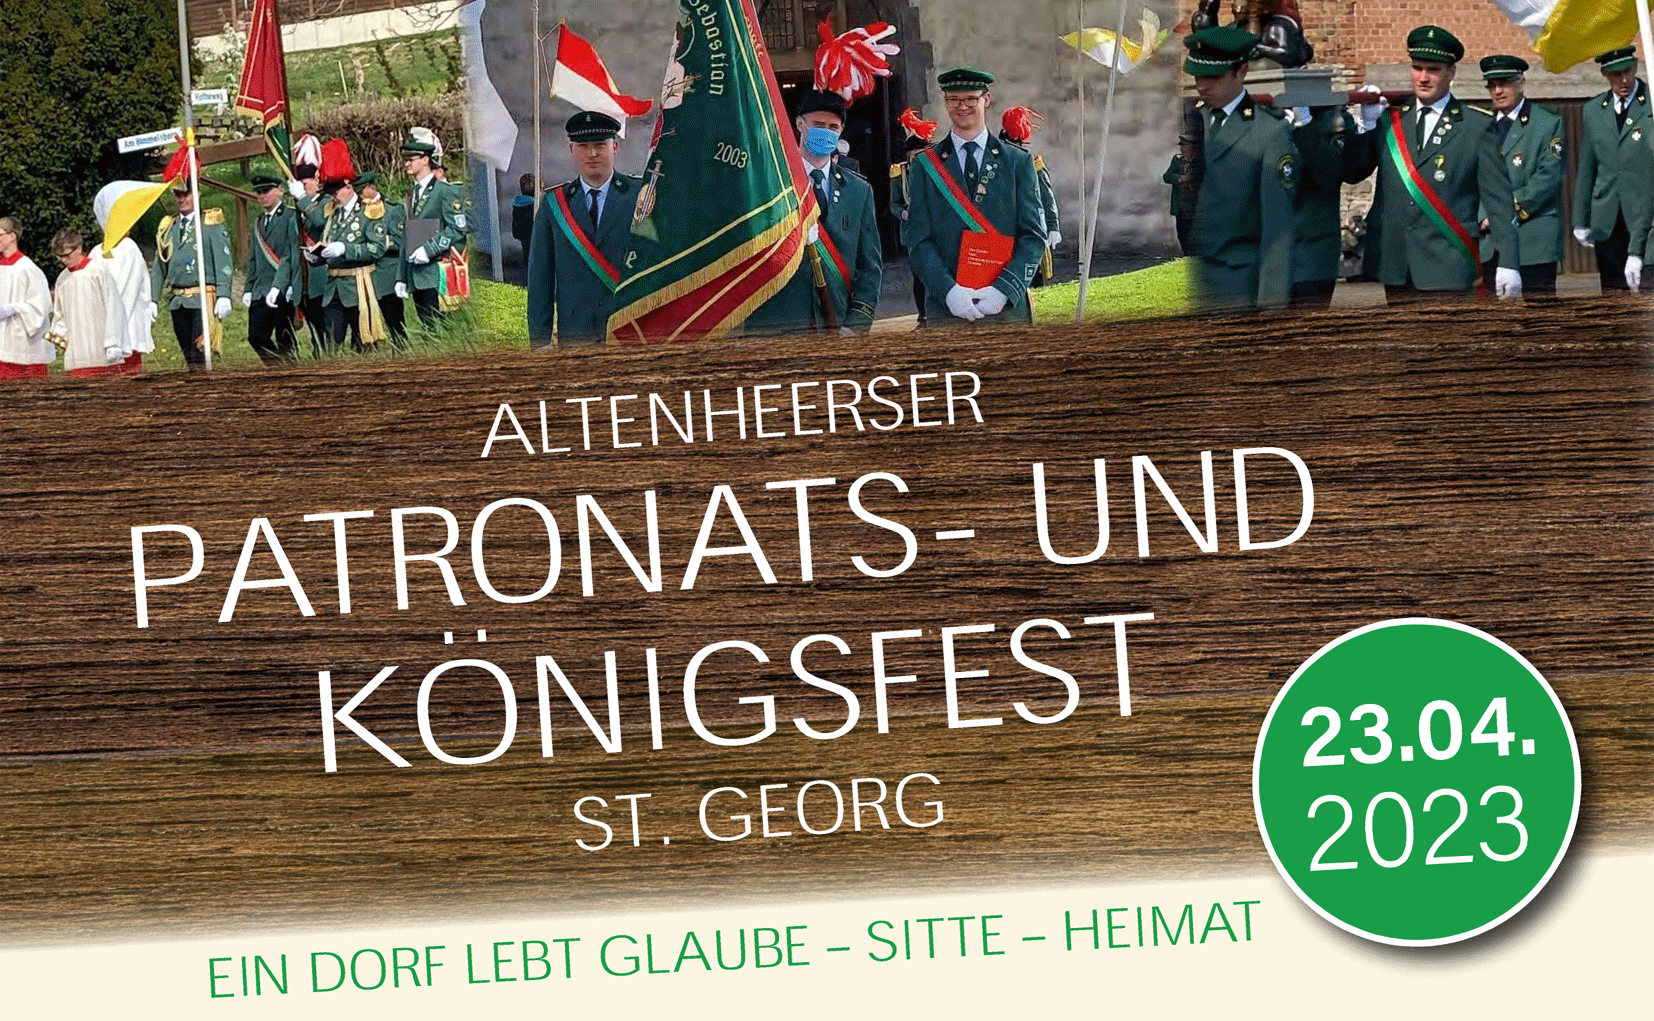 Patronatsfest St. Georg mit Königsproklamation